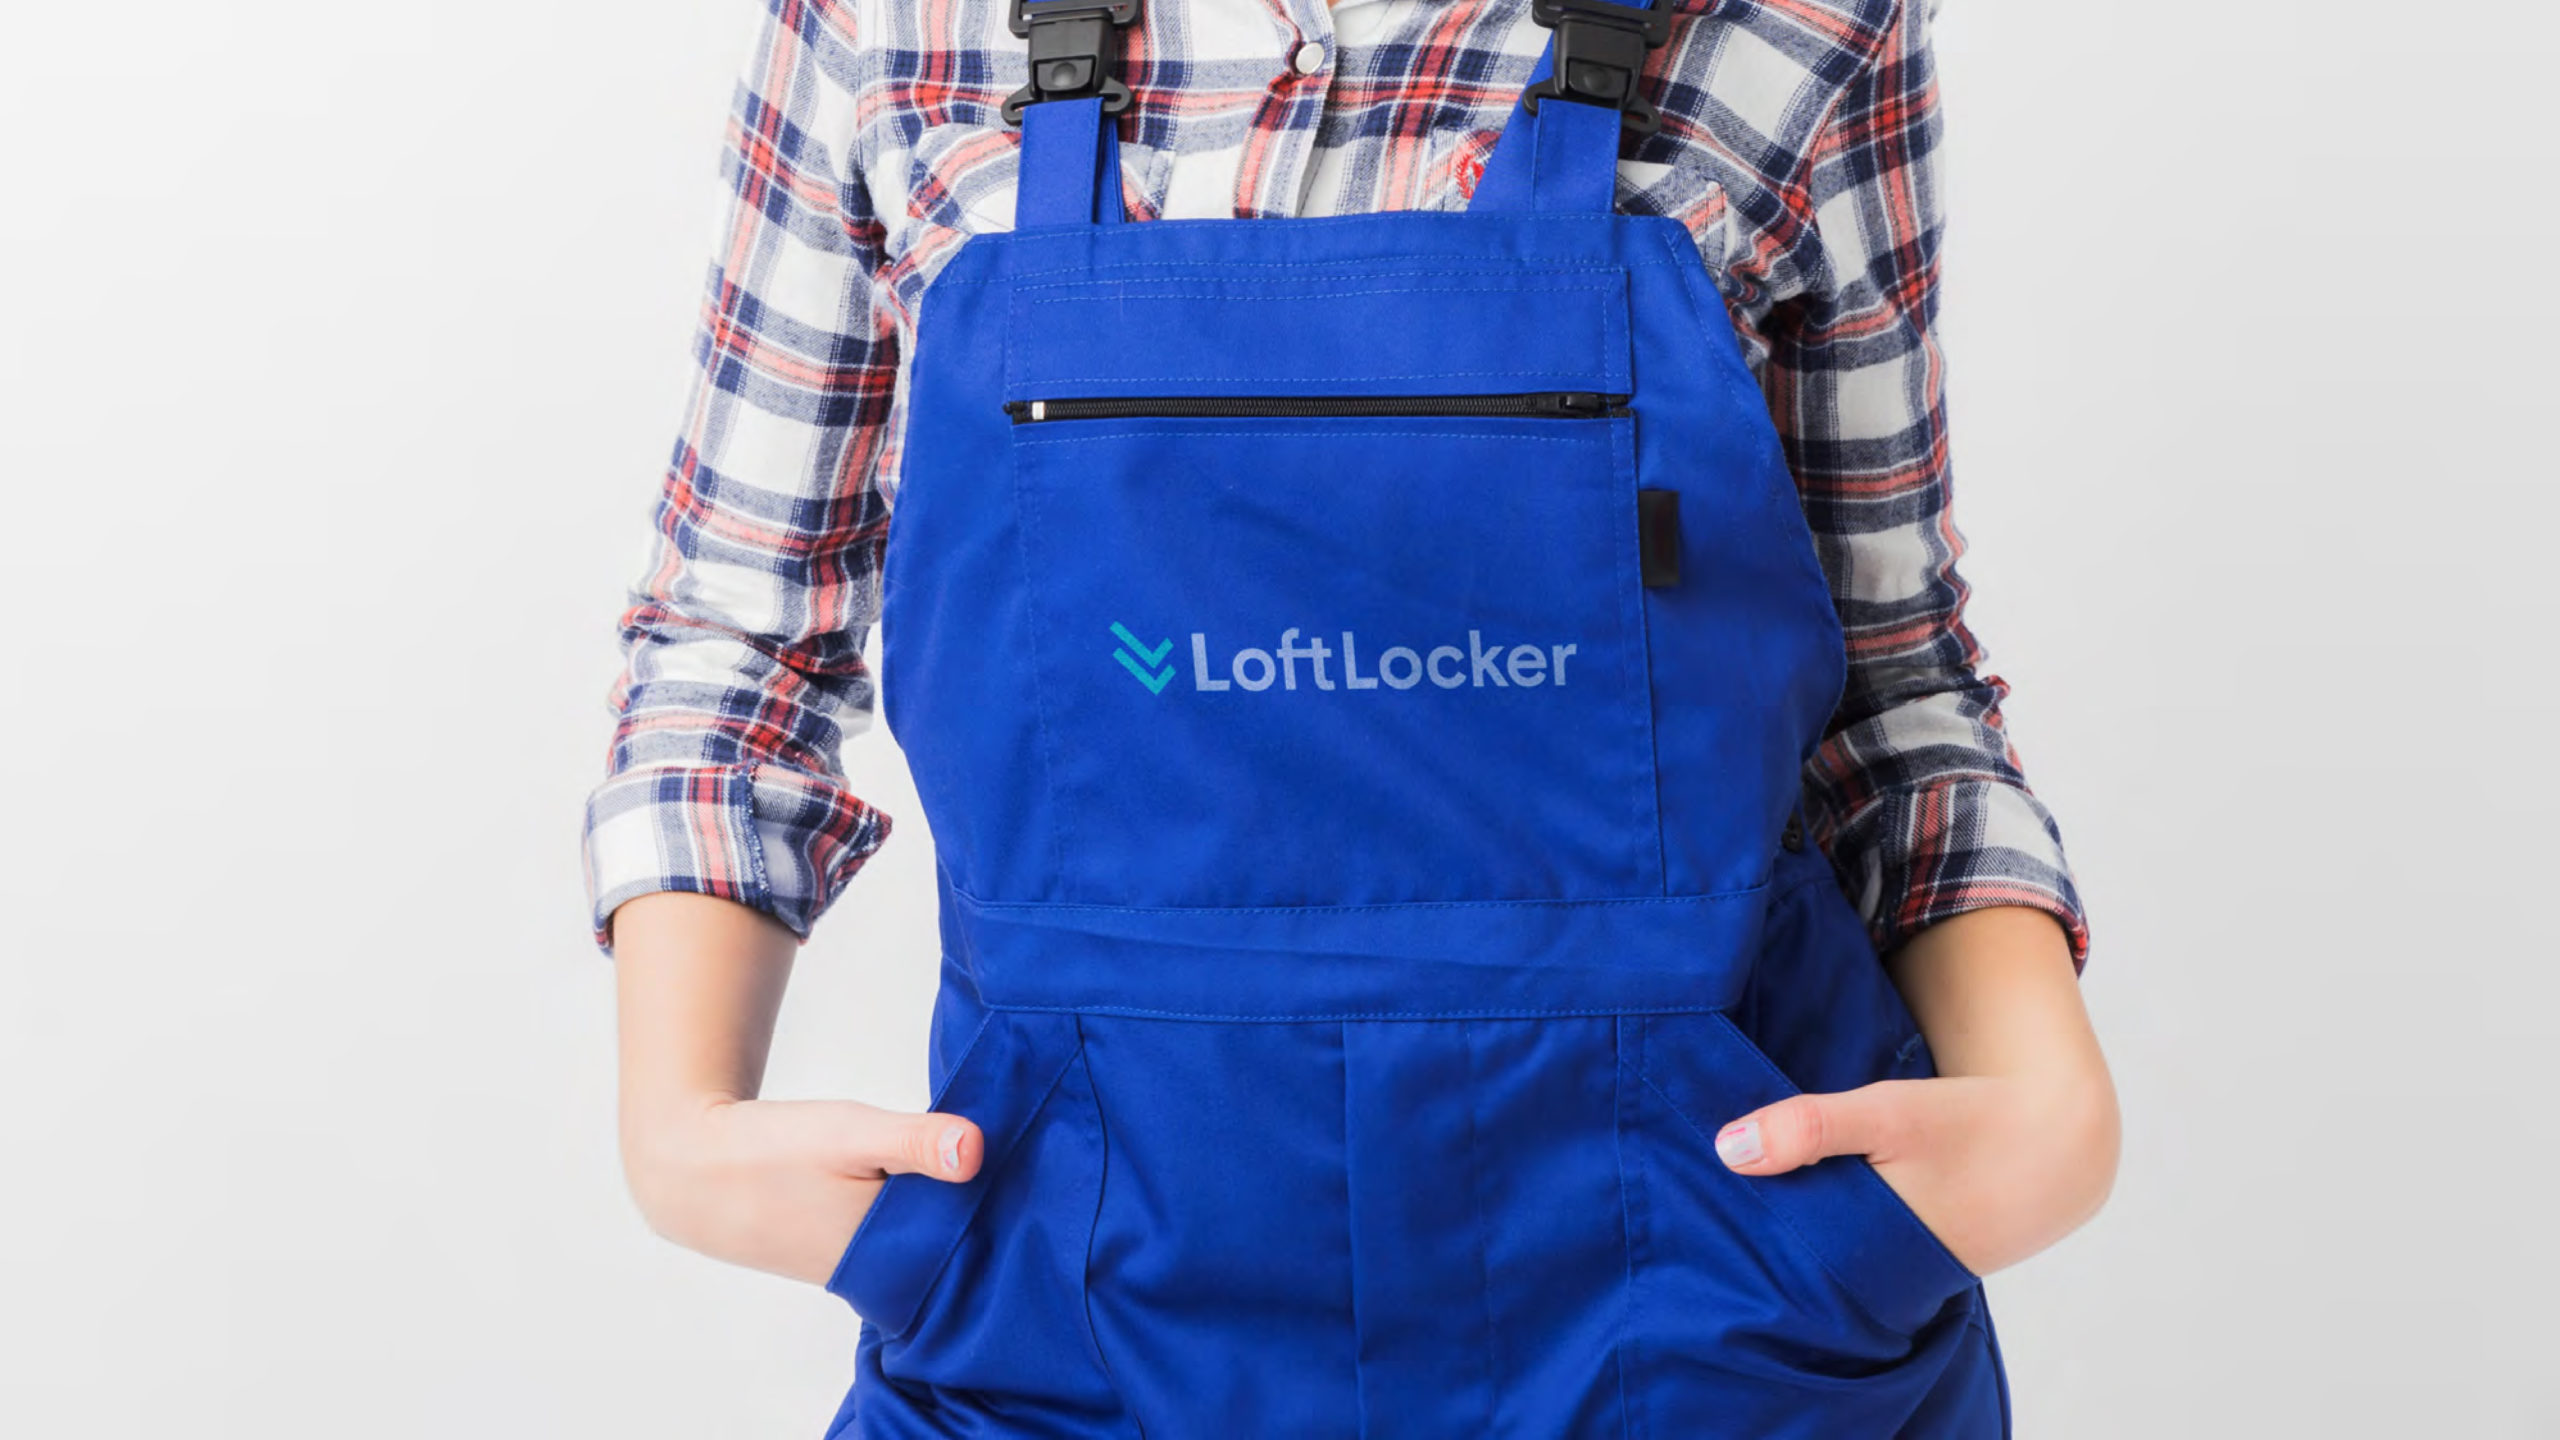 loftlocker 7 scaled - LoftLocker